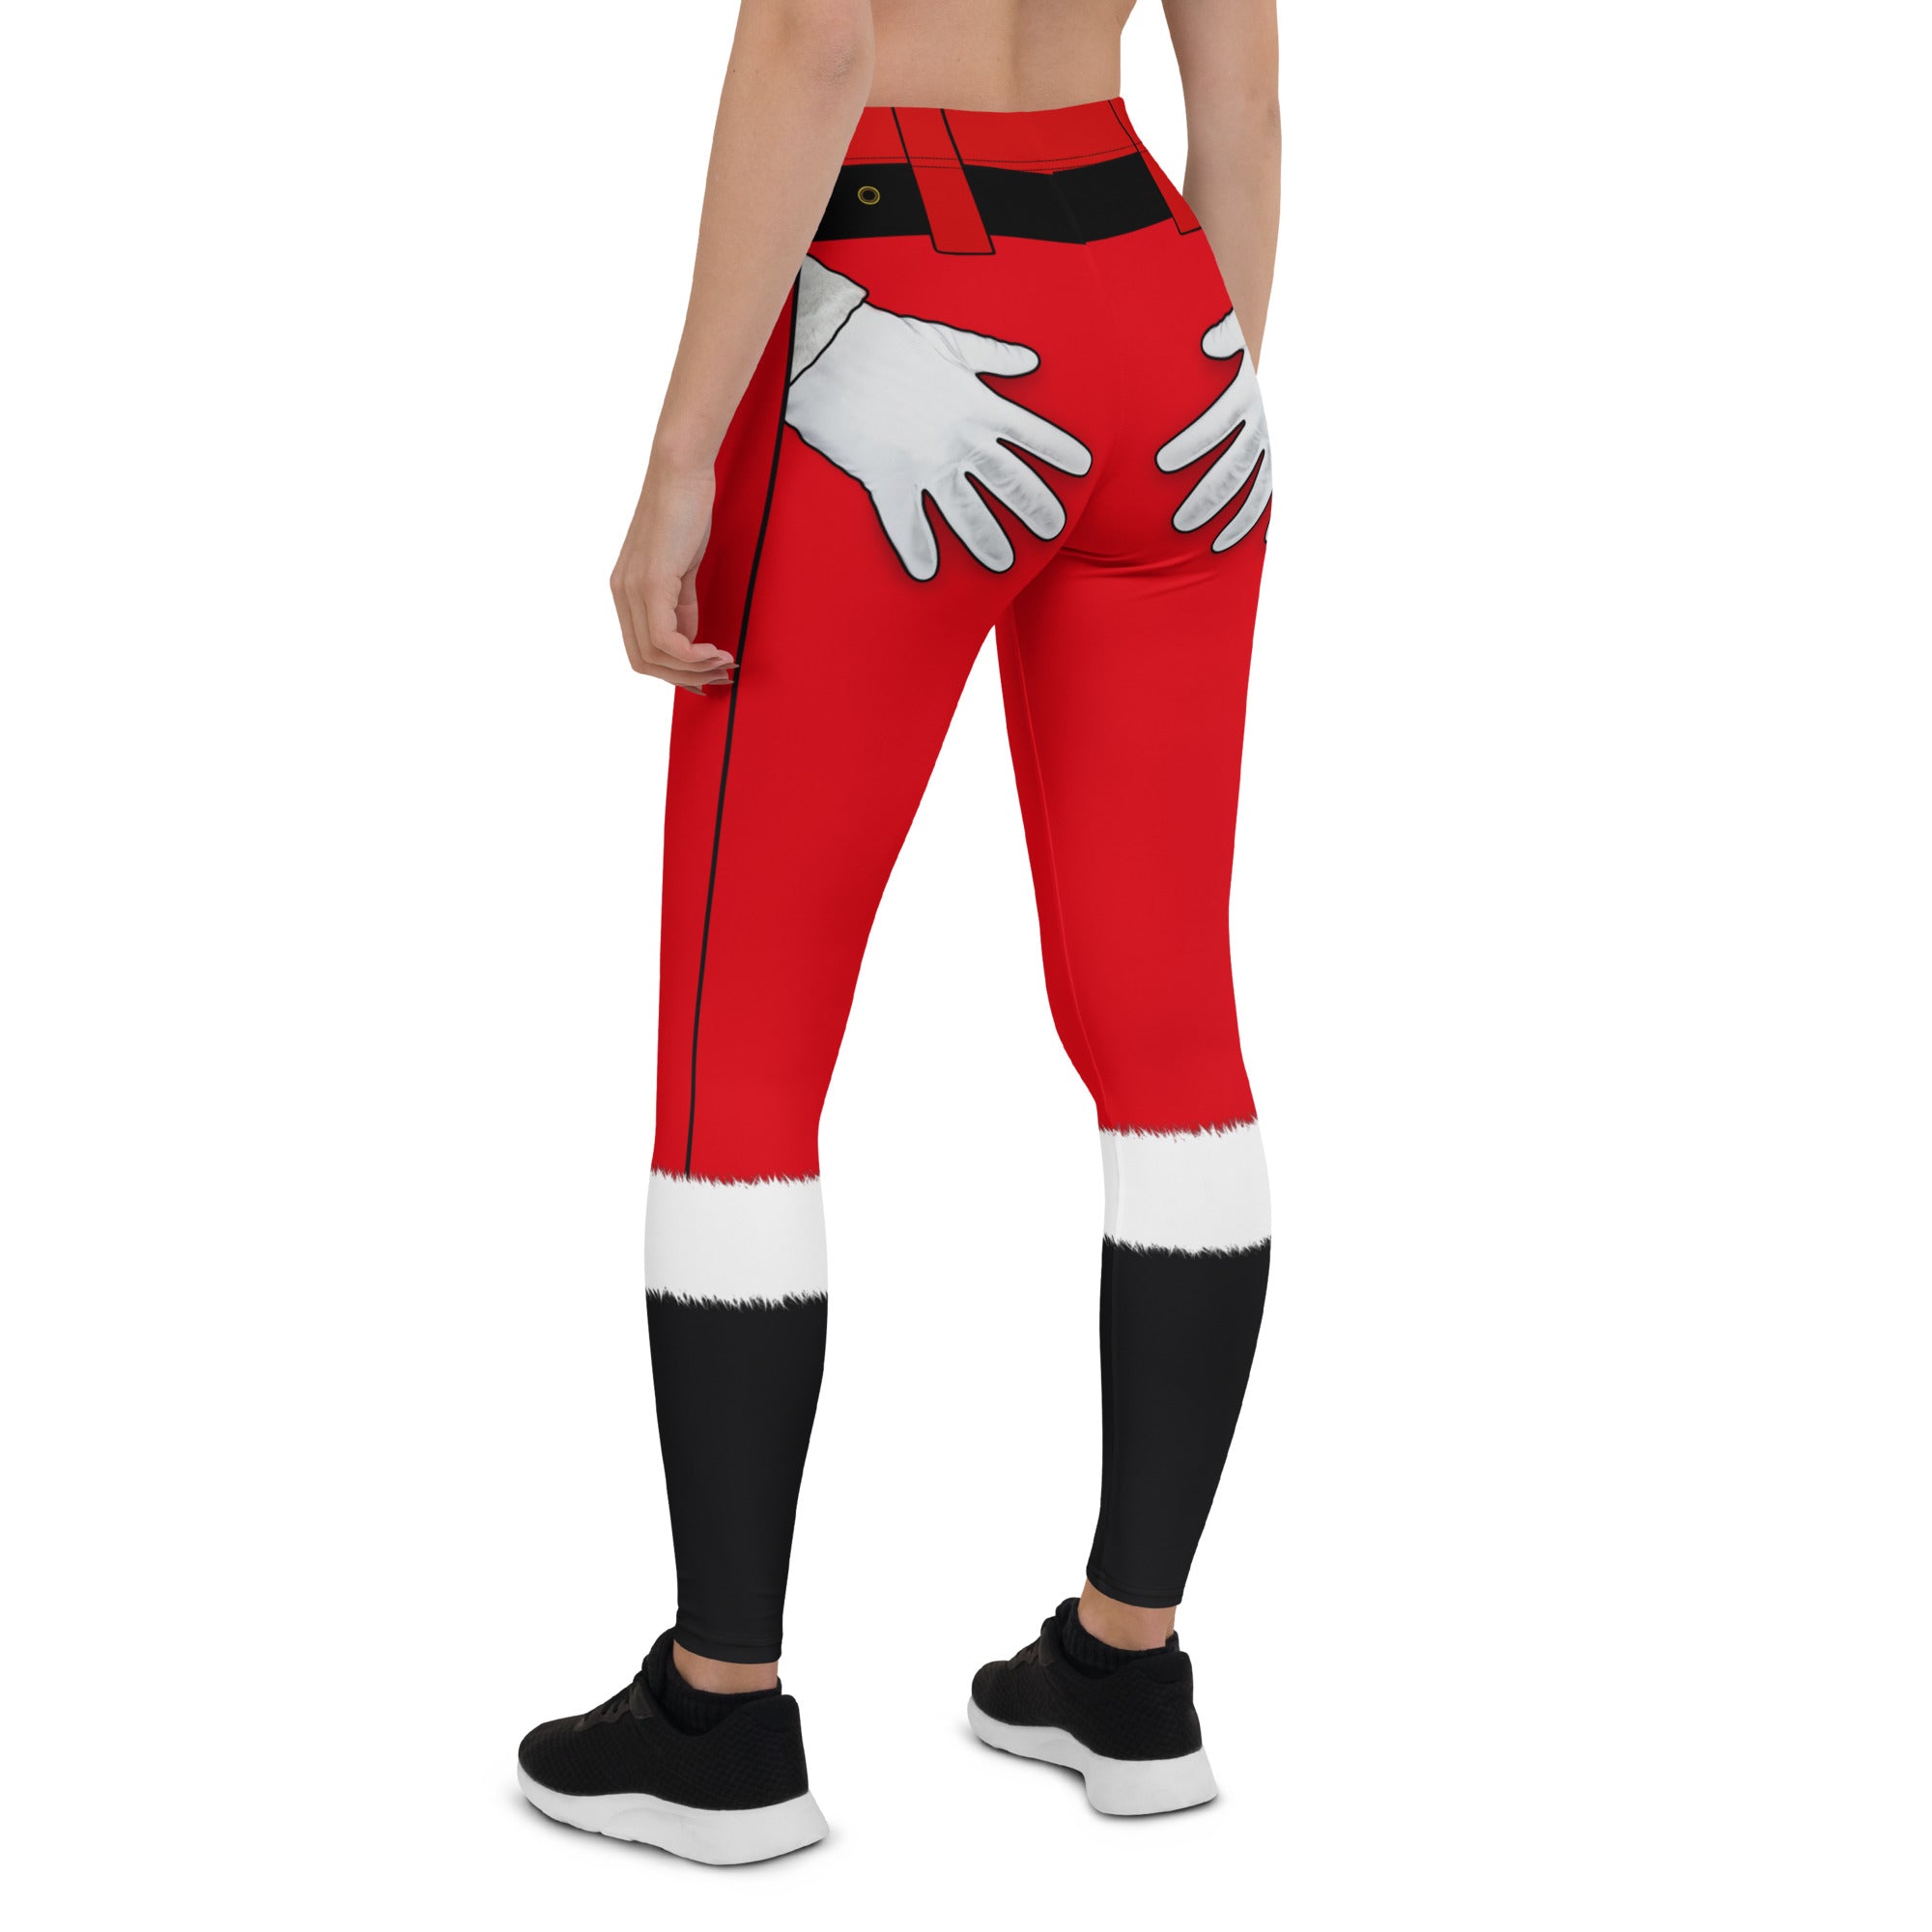 So Festive Christmas Leggings: Women's Christmas Outfits